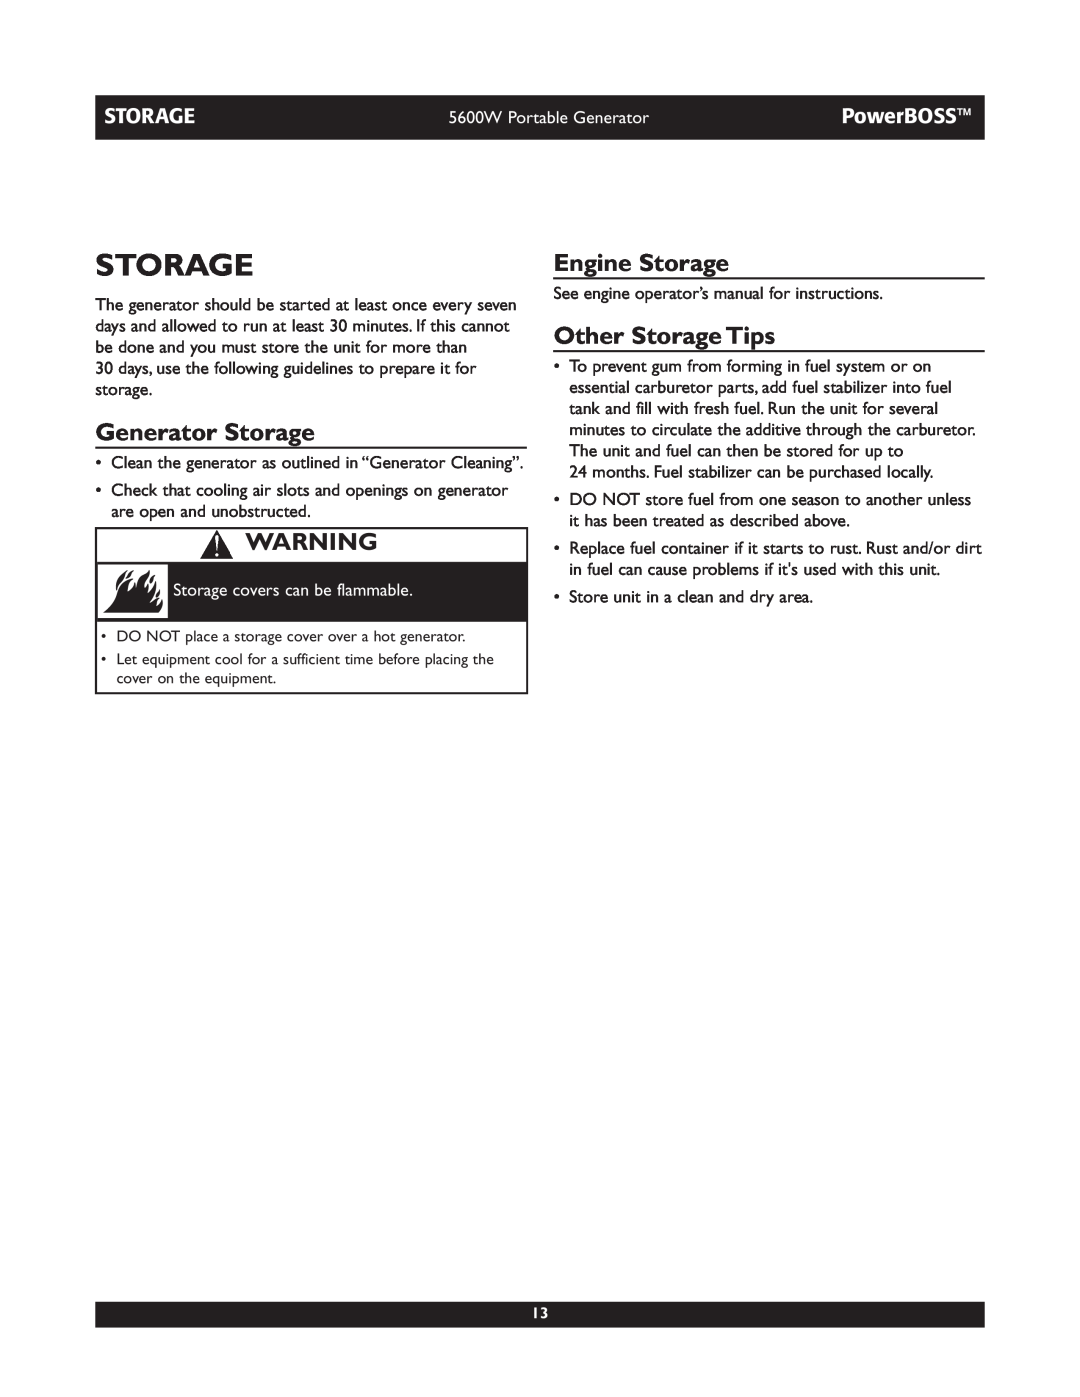 Briggs & Stratton 30230 manual Generator Storage, Engine Storage, Other Storage Tips, Storage covers can be flammable 